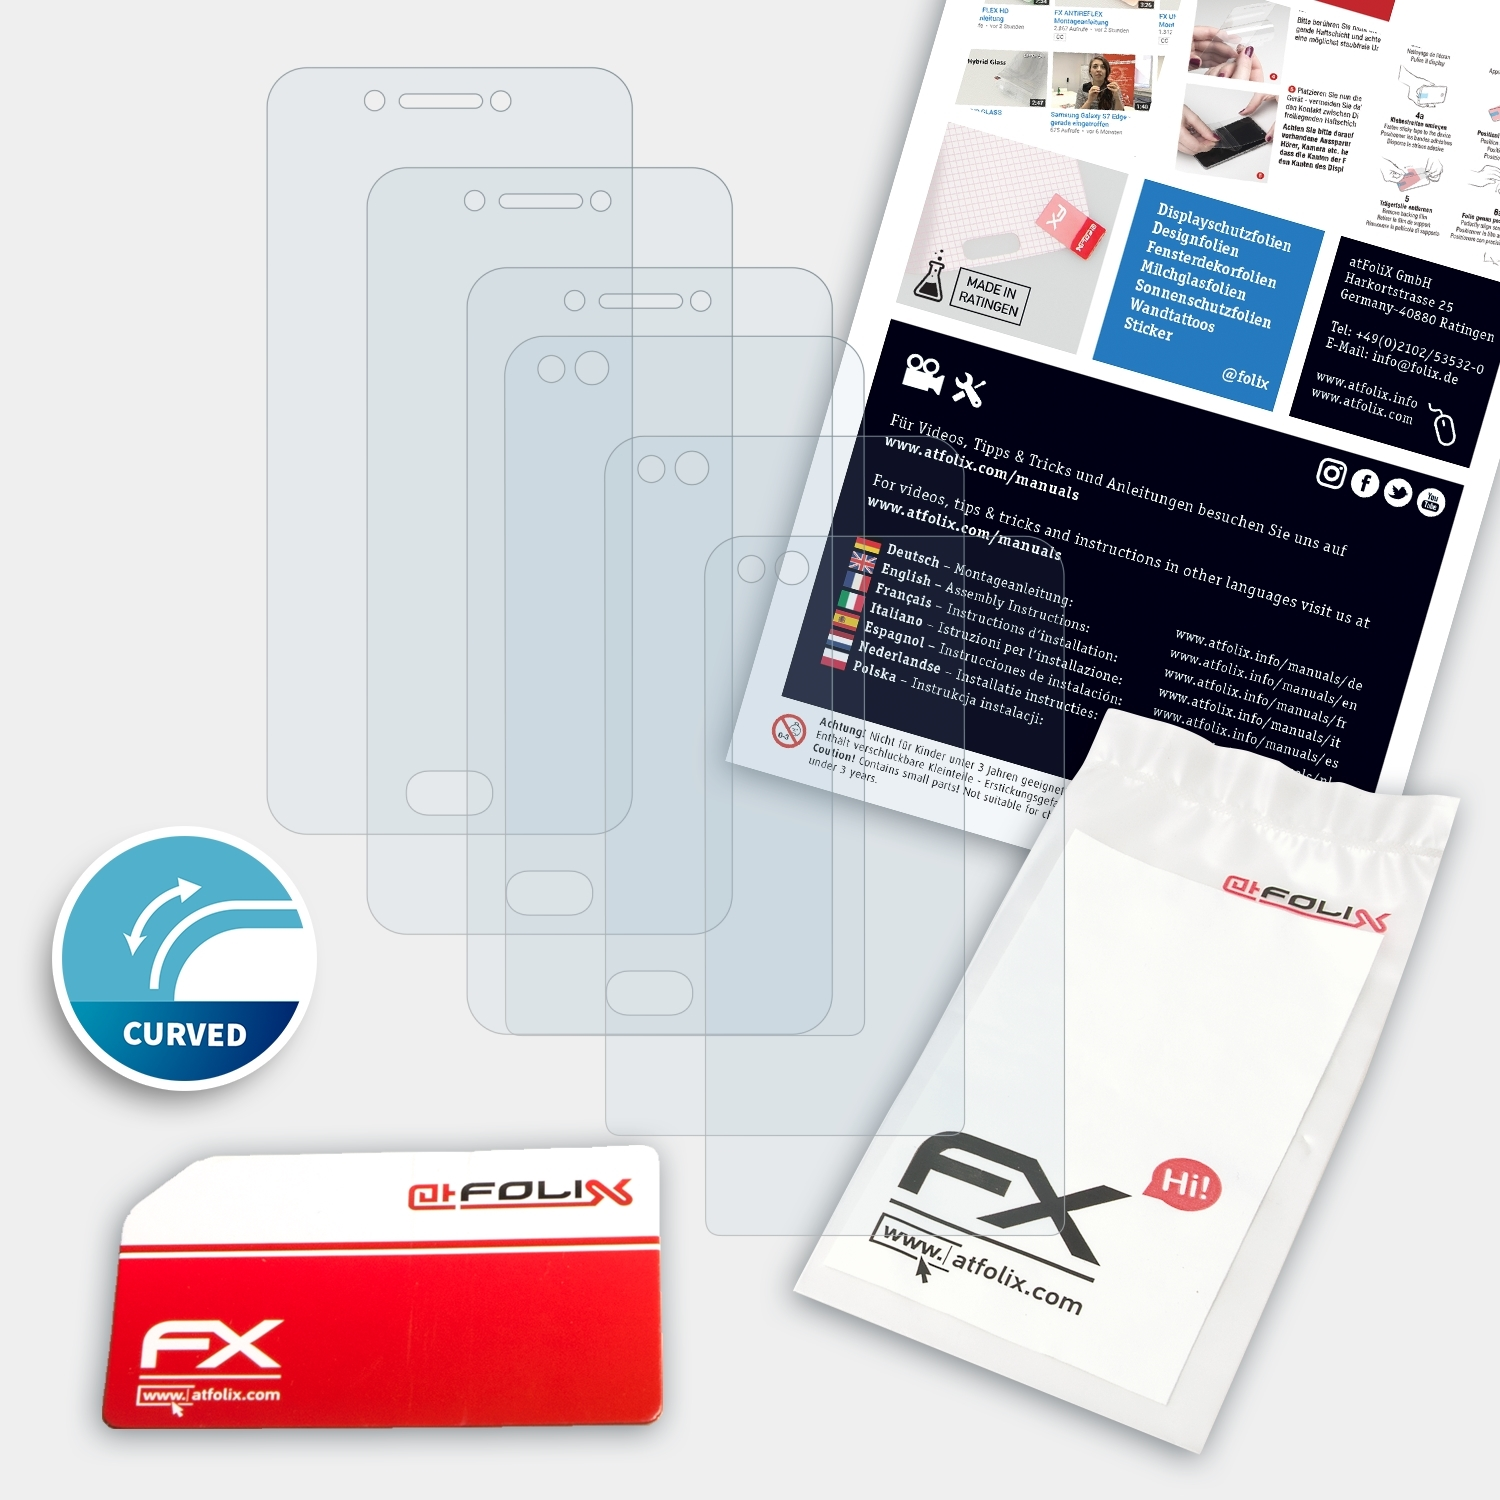 3 Devices FX-ActiFleX YotaPhone Plus) 3x Displayschutz(für Yota ATFOLIX